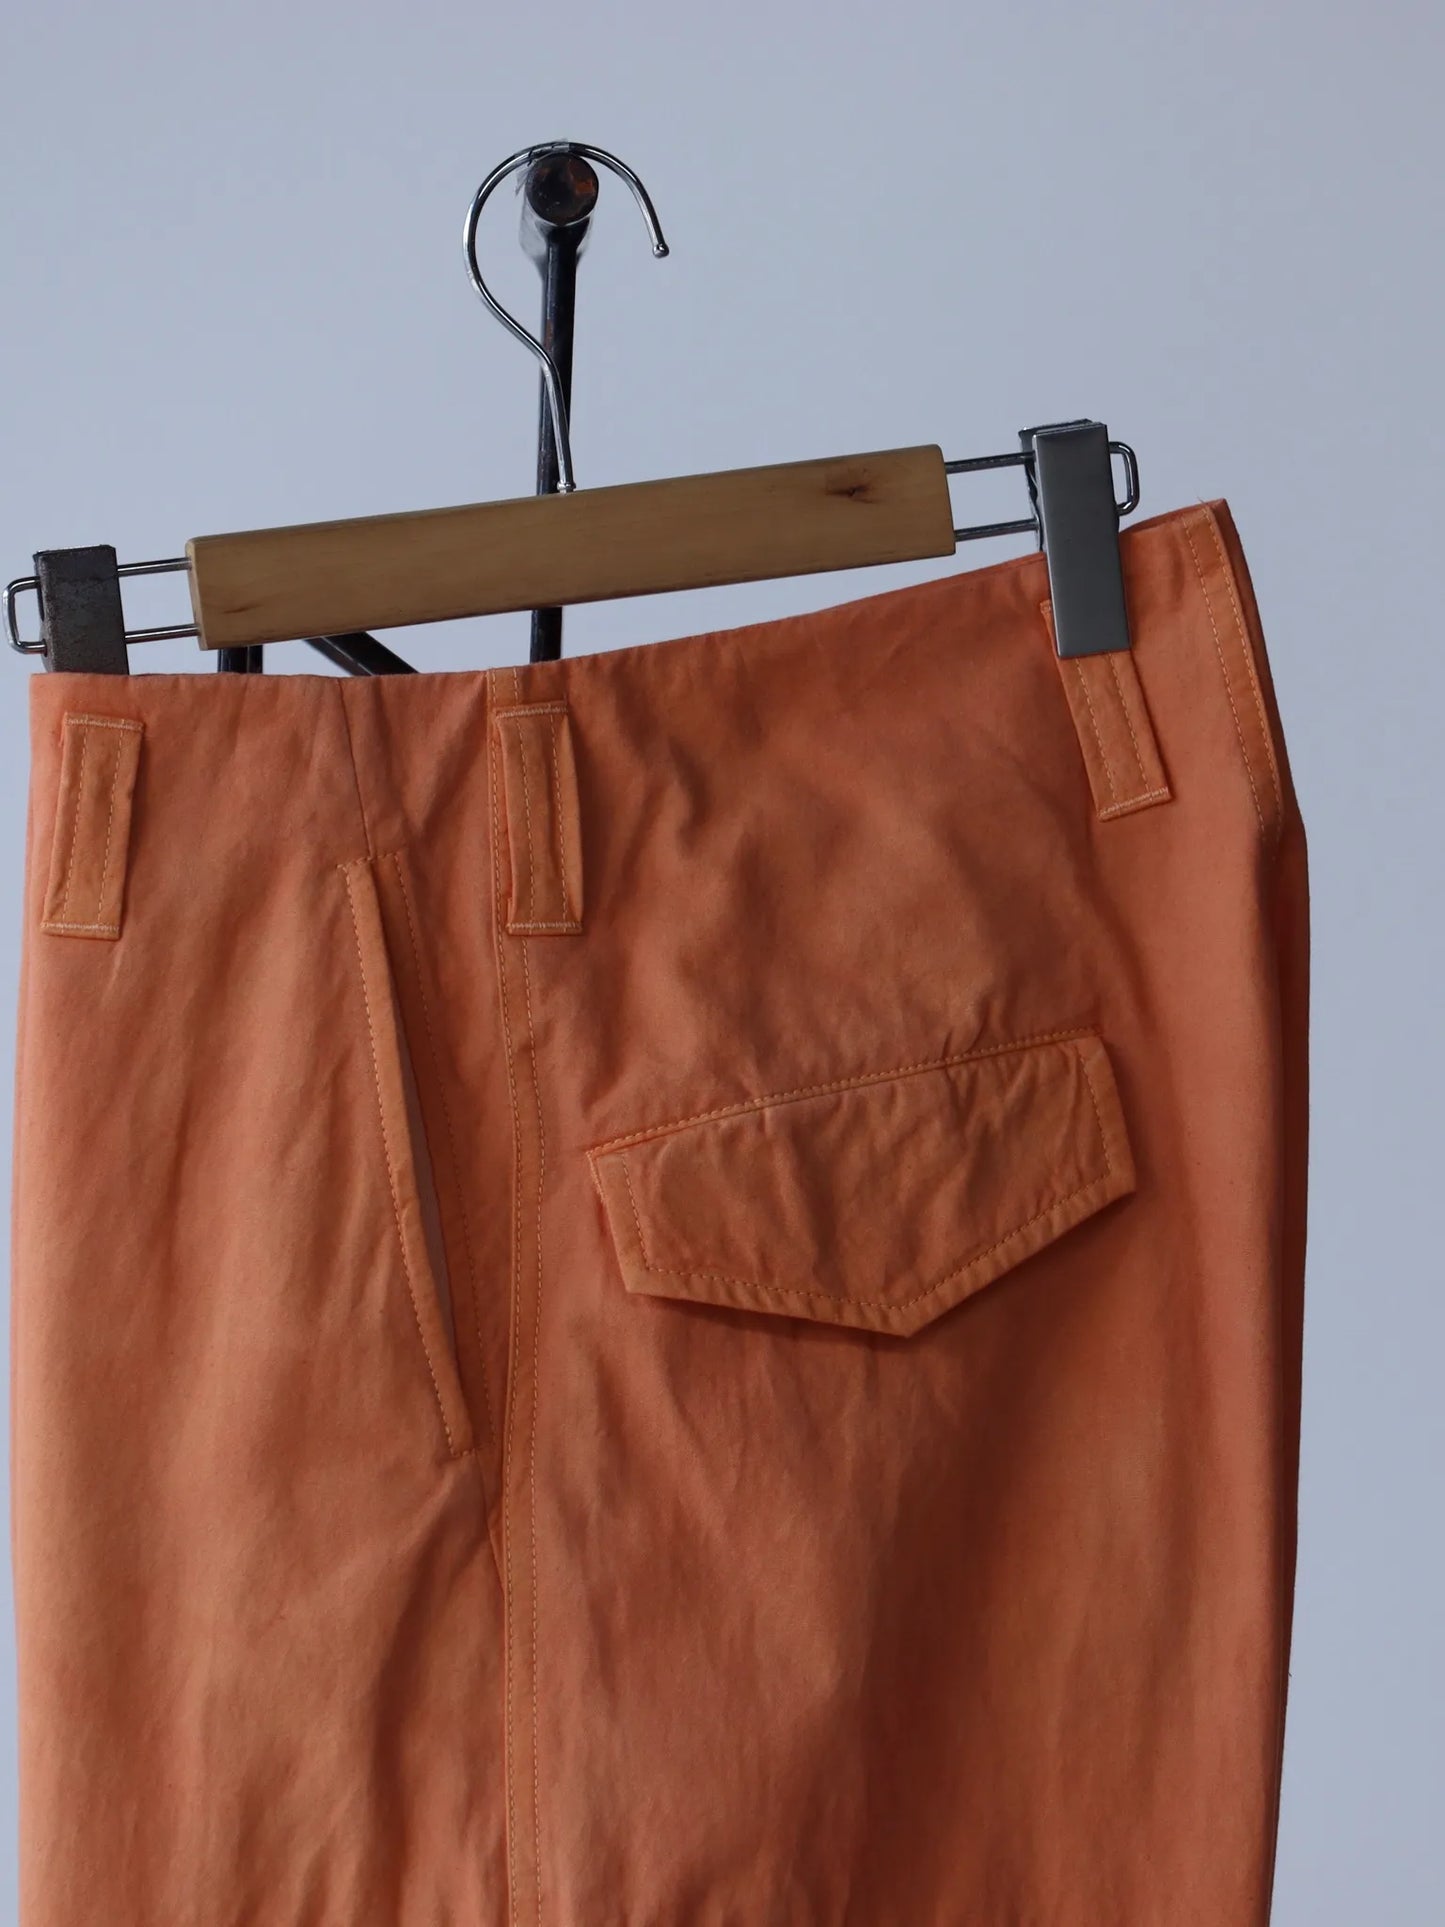 amachi-double-knee-cergo-pants-light-weight-orange-6